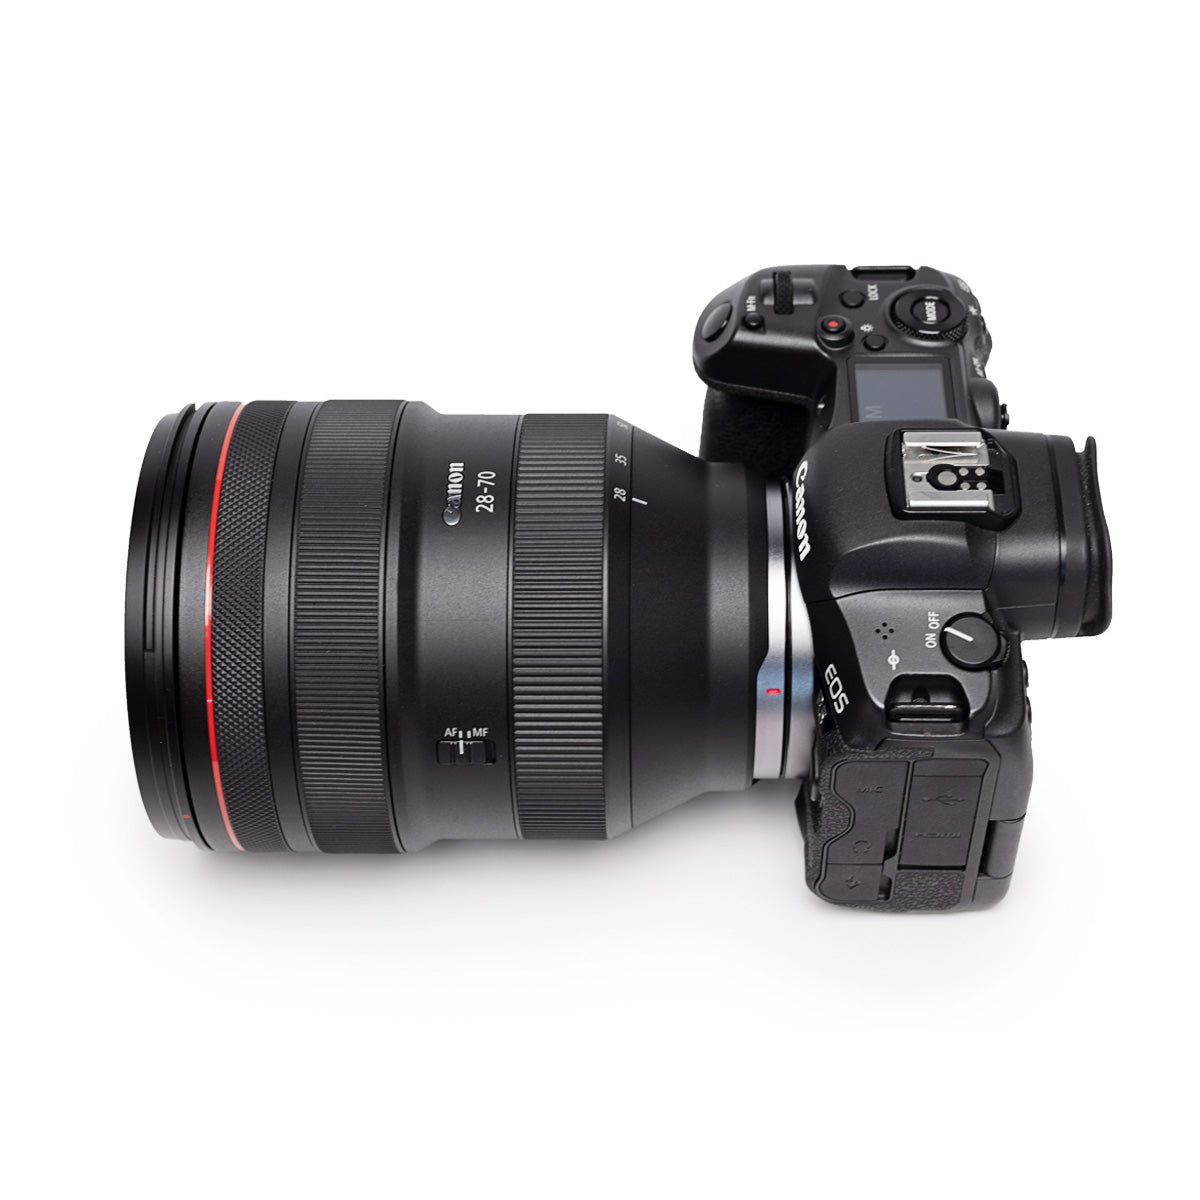  Canon RF 28-70mm f/2L USM Lens, Black - 2965C002 : Electronics